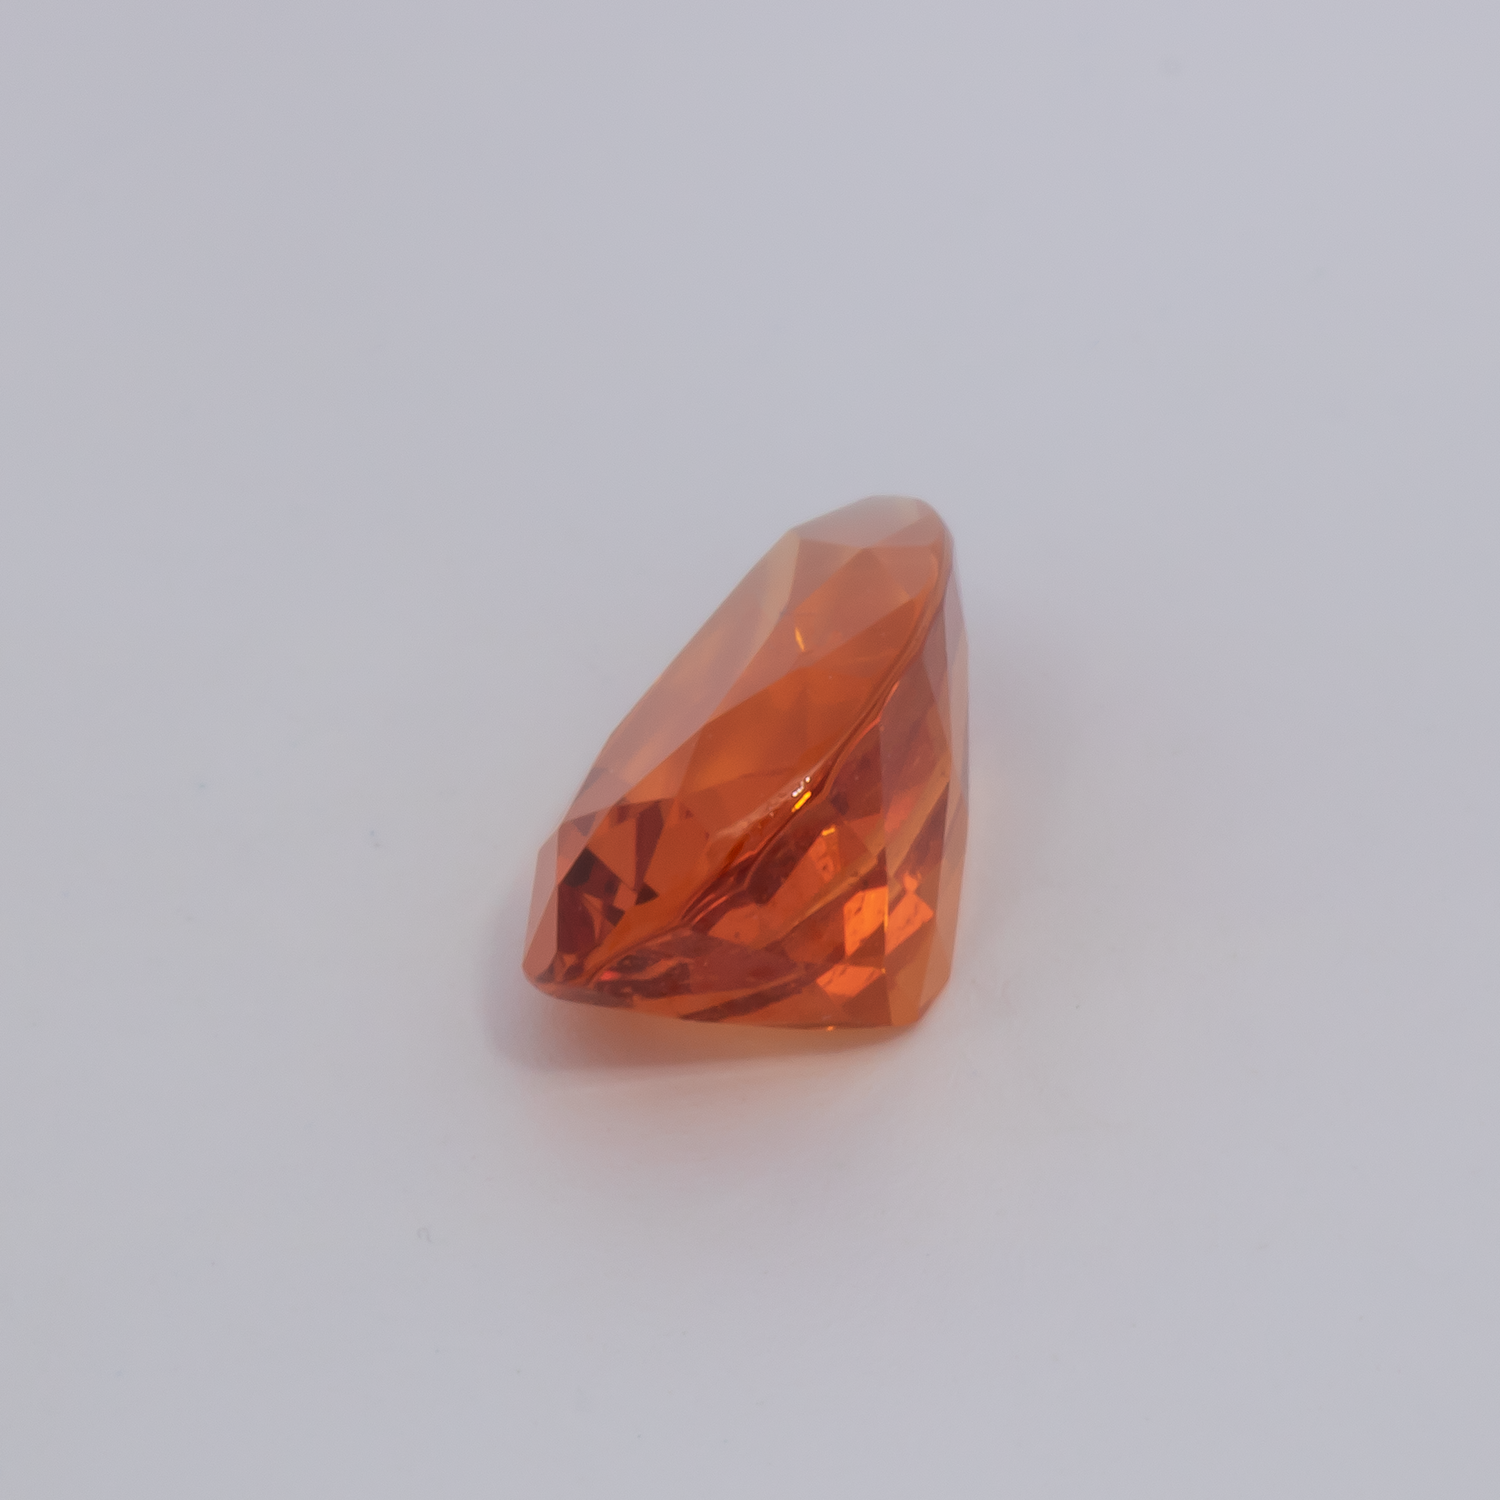 Mandarin Granat - orange, birnform, 11.6x7.3 mm, 3.53 cts, Nr. MG99064